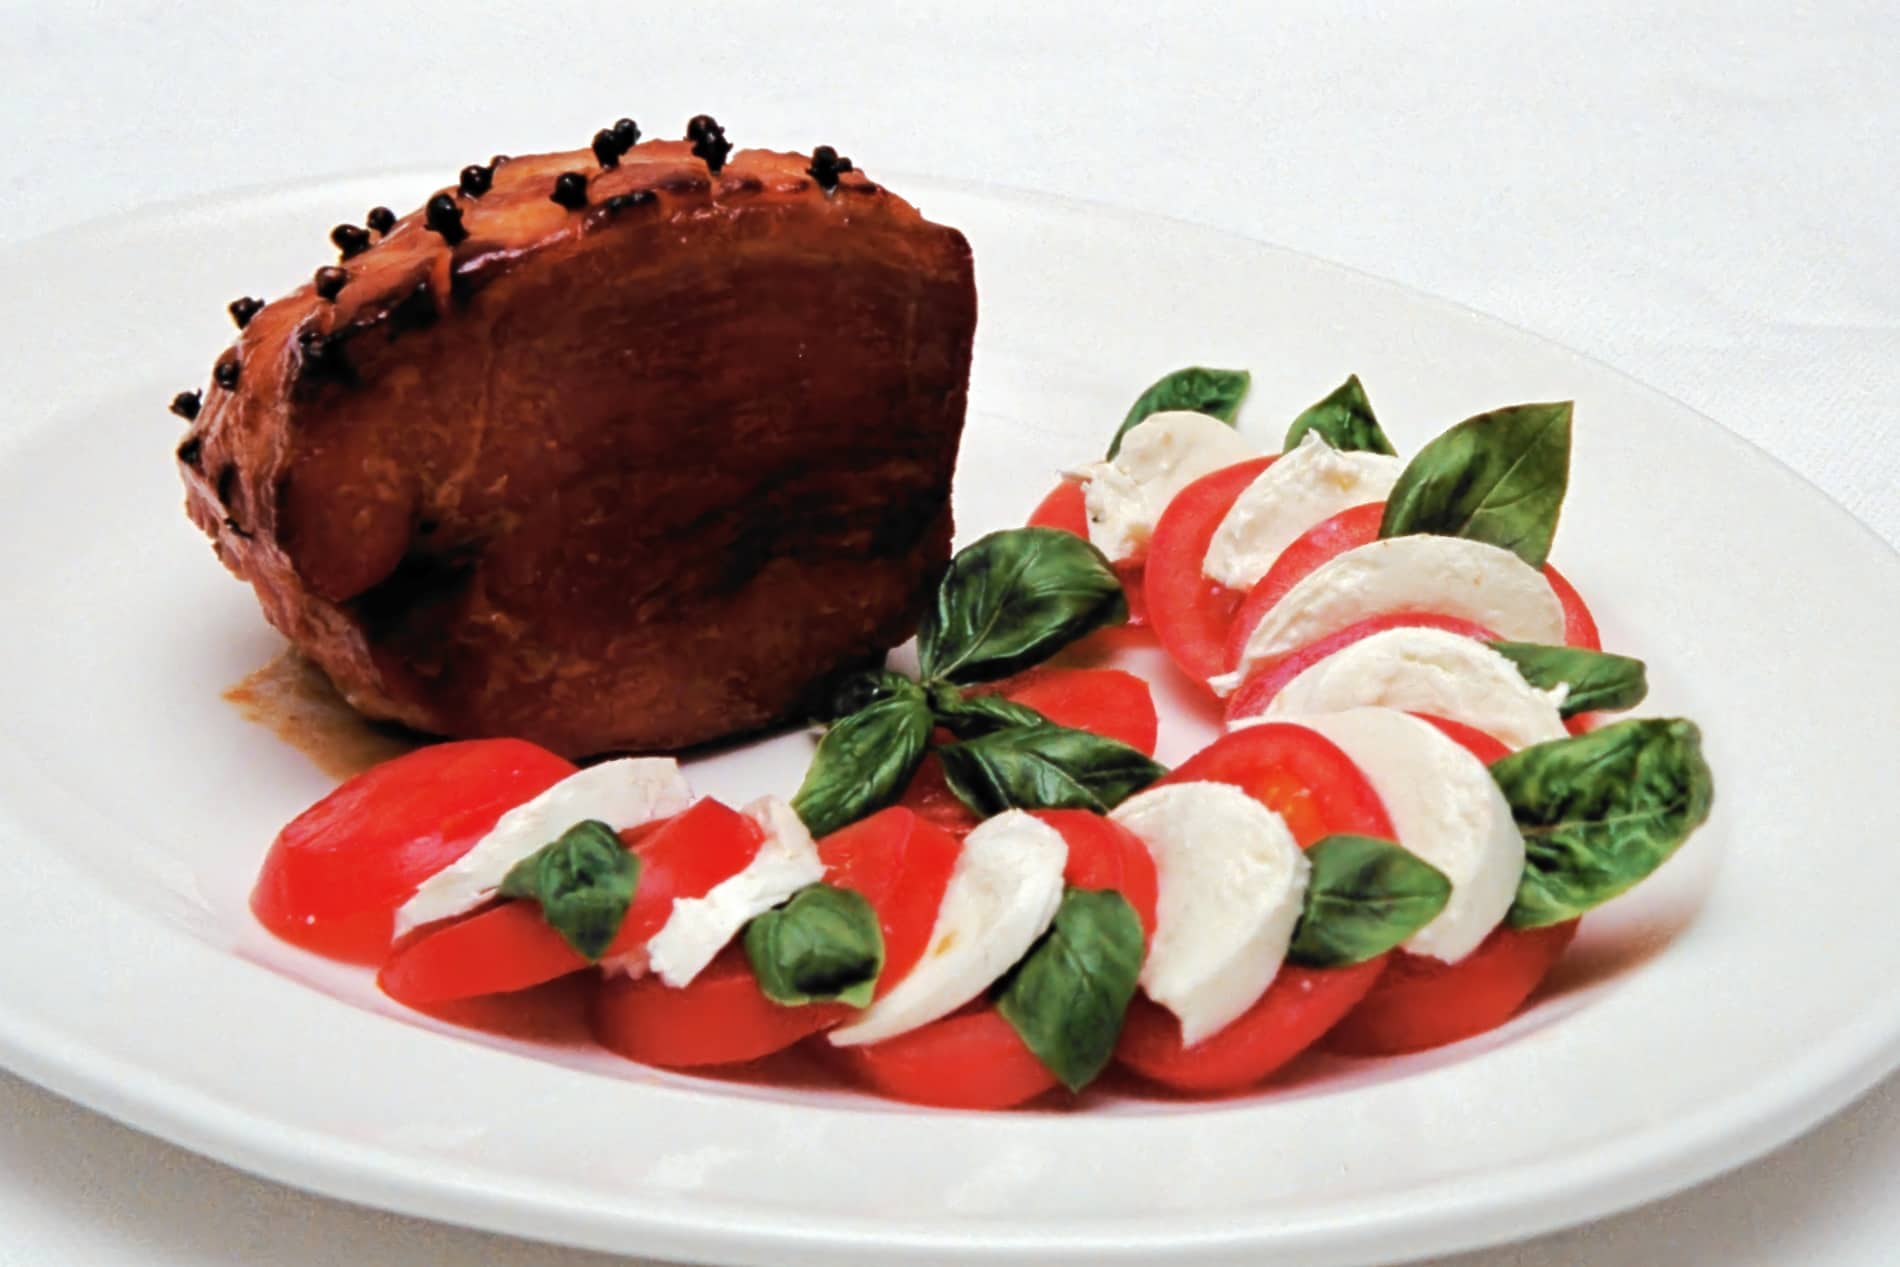 Glazed Ham, ready to be served